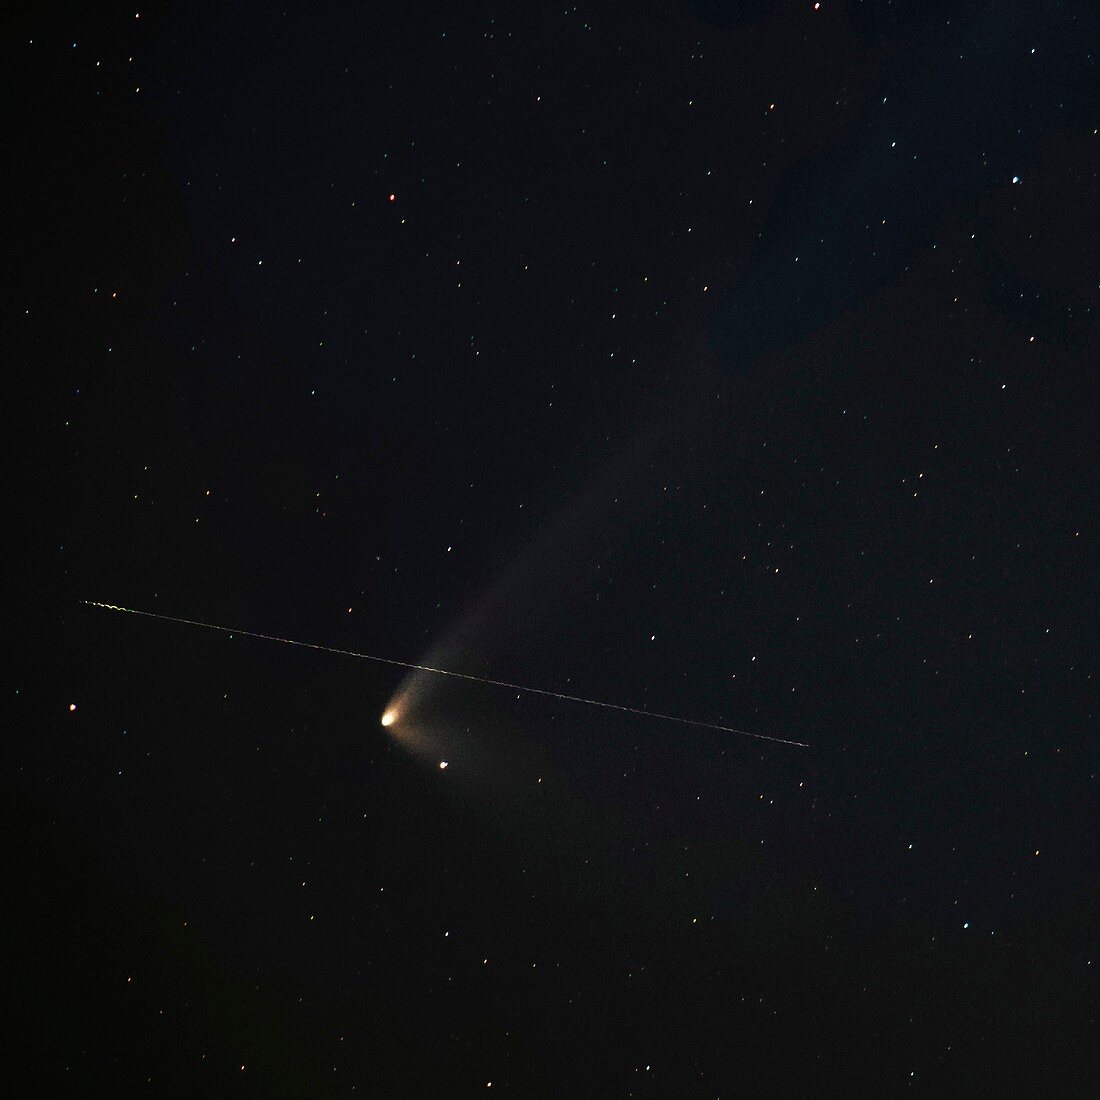 Comet PANSTARRS and wambling meteor